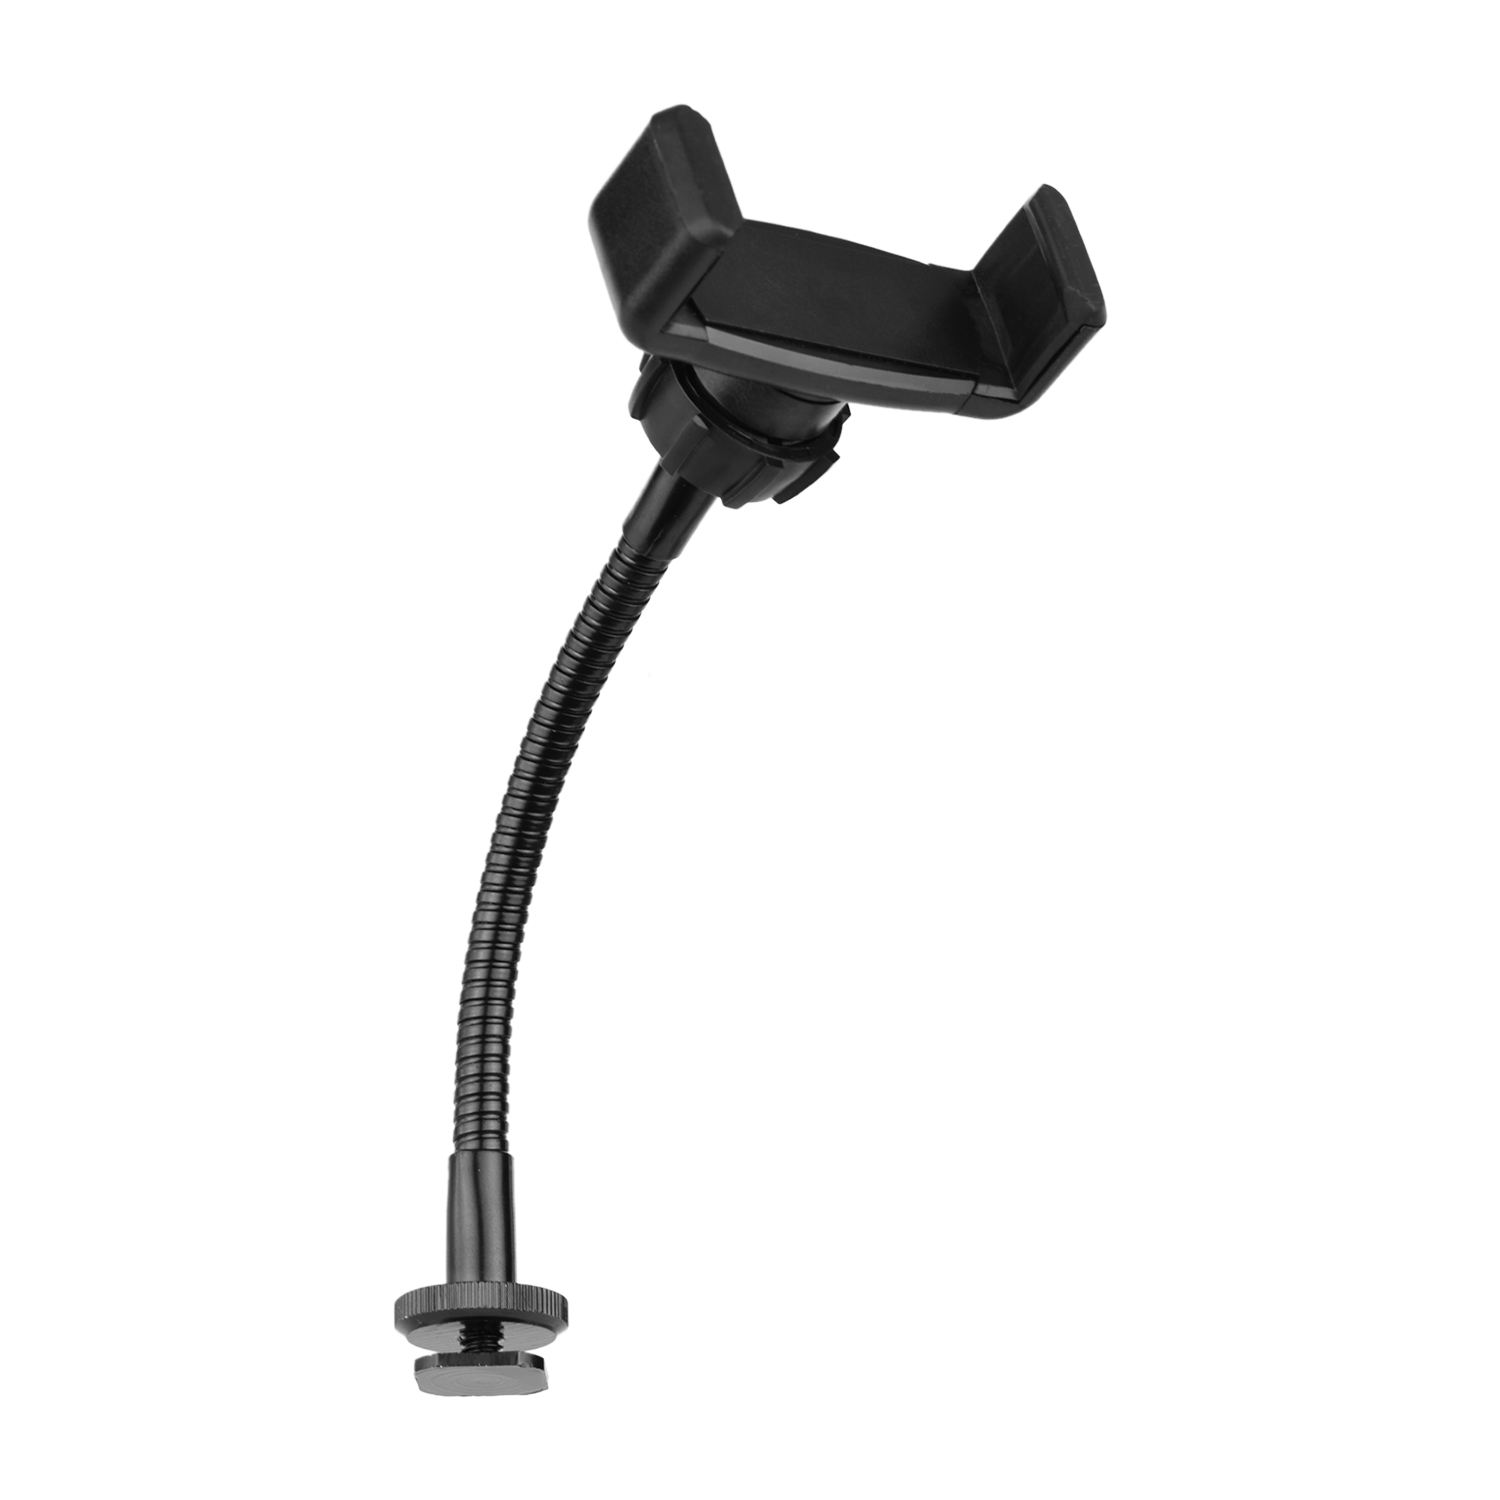 mobile phone holder light tripod adjustable angle stand selfie ring universal pk h2523%20(7)